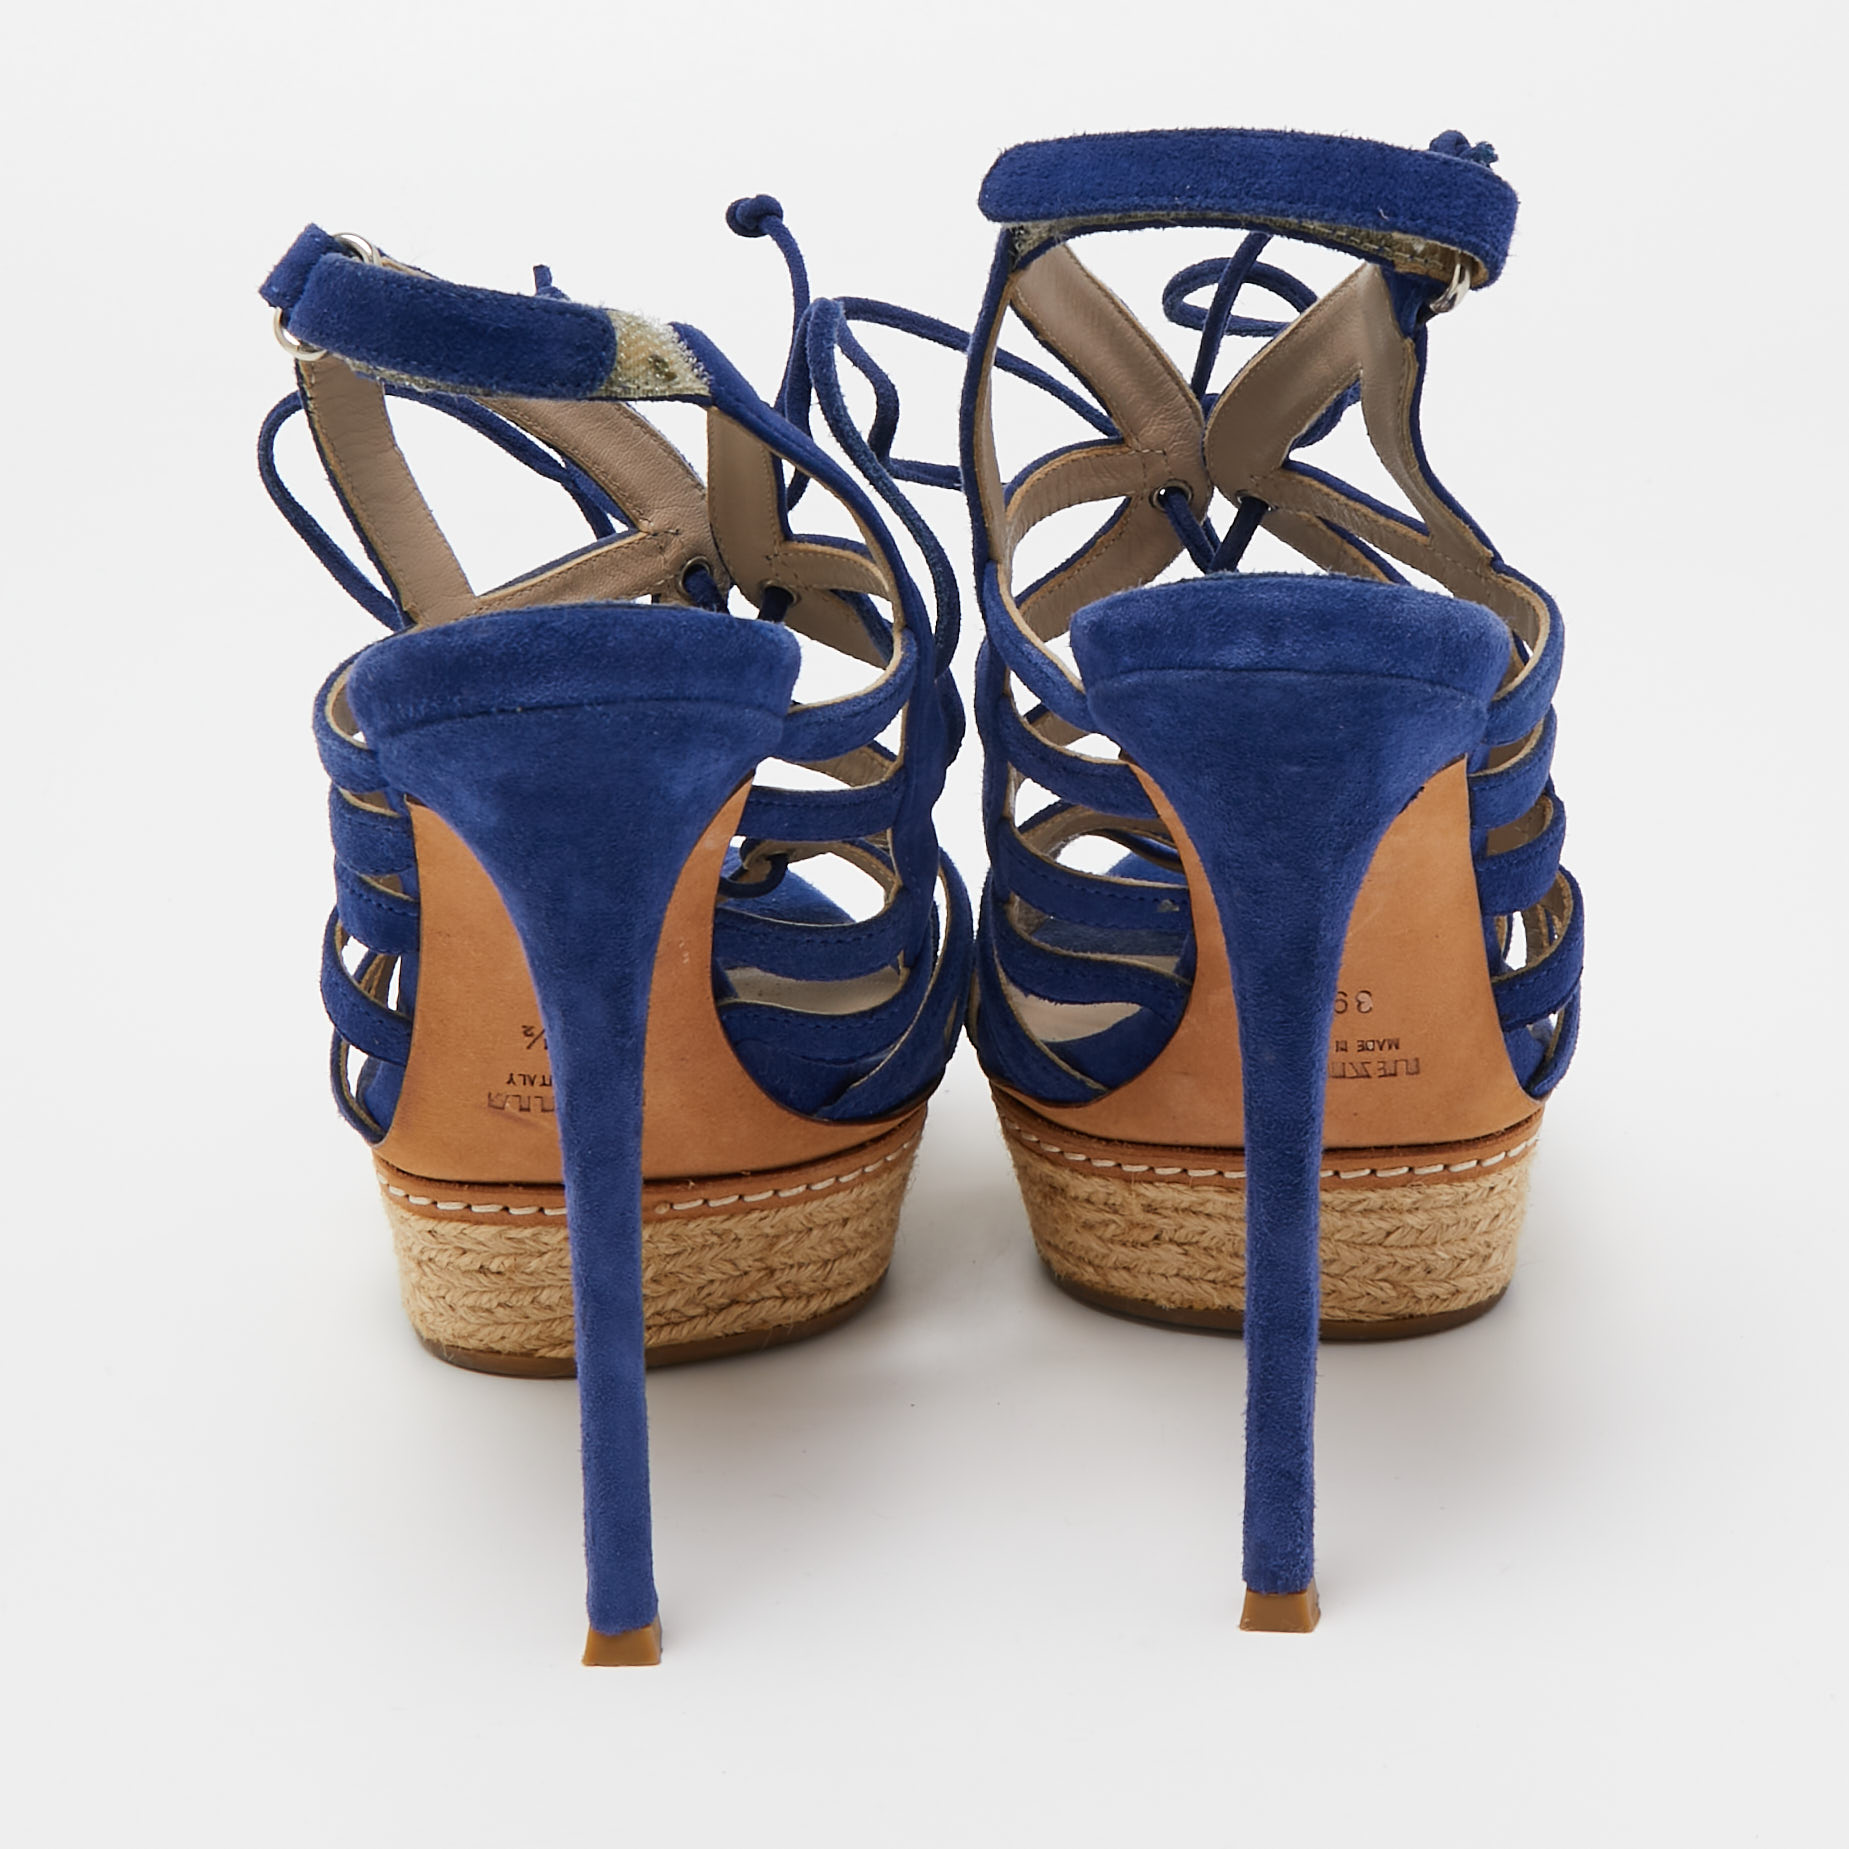 Le Silla Blue Suede Strappy Platform Sandals Size 39.5